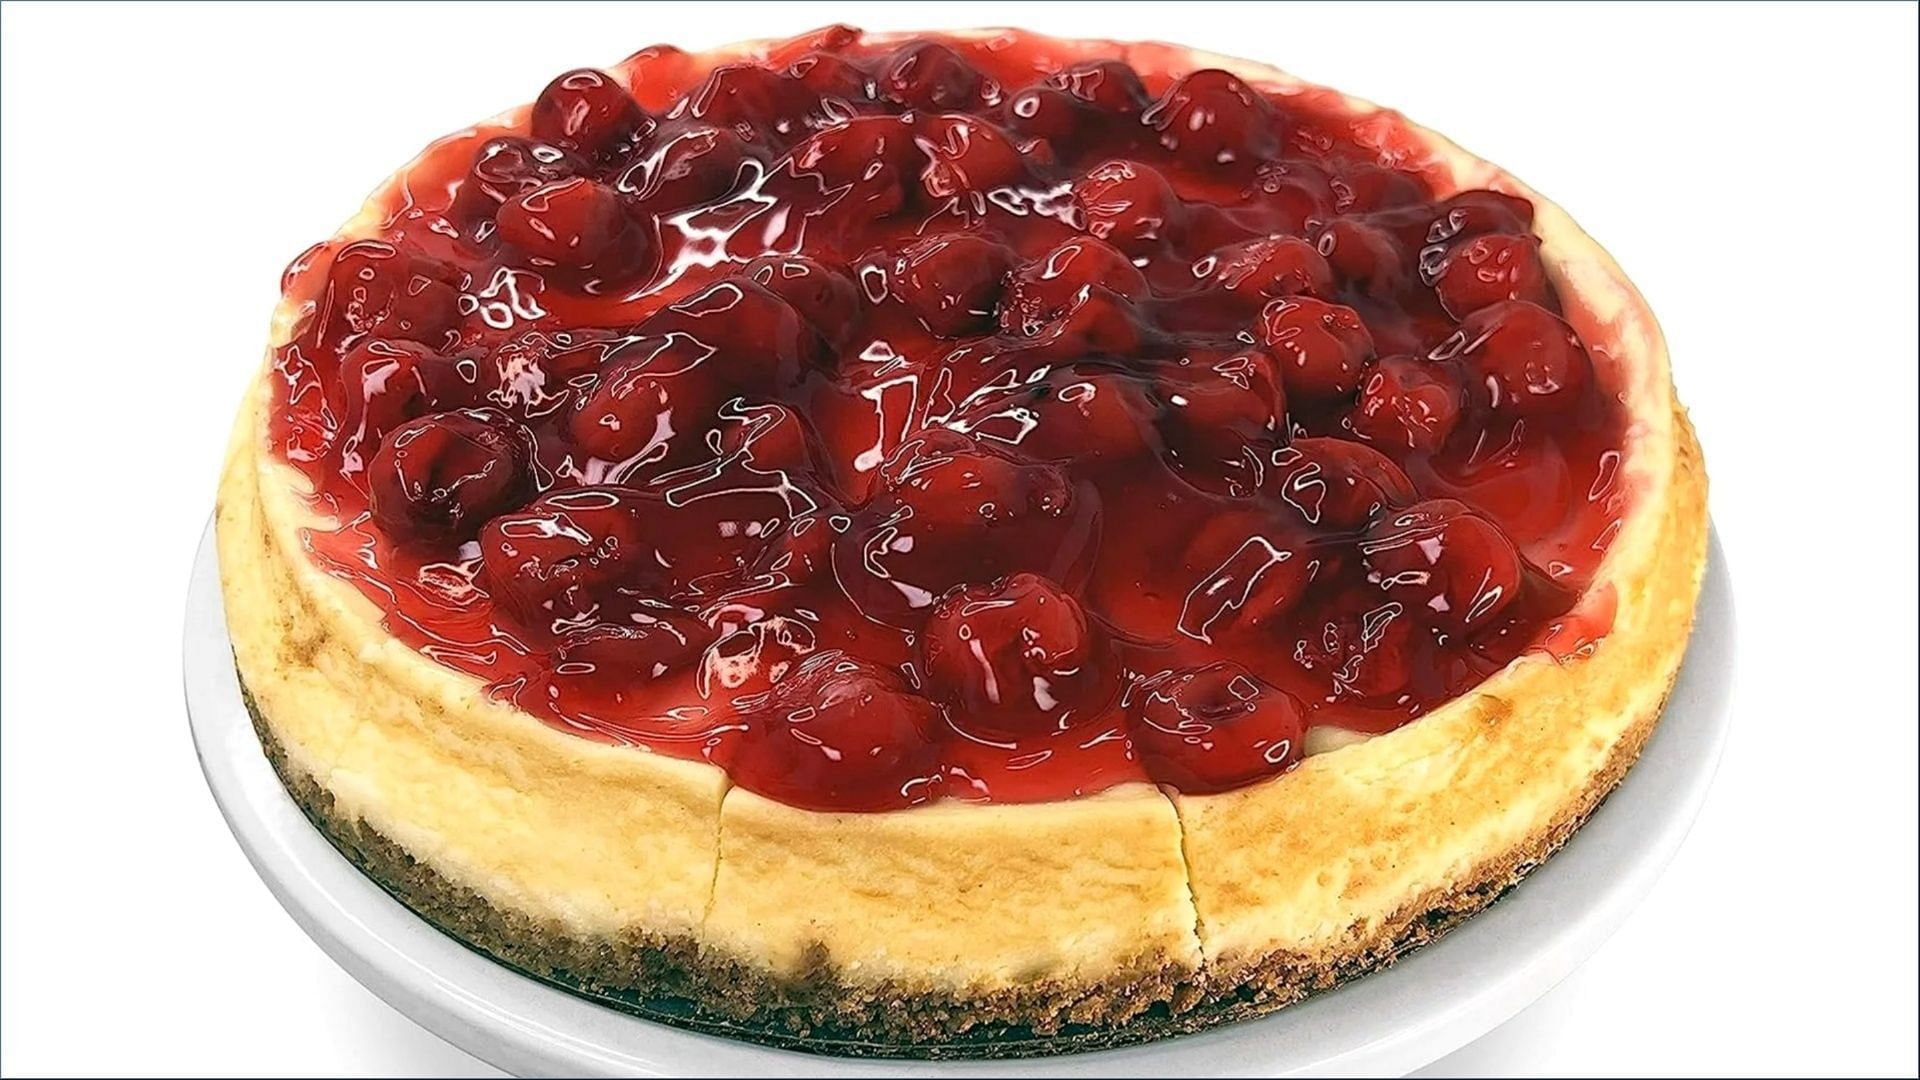 The Cherry-Topped Cheesecake (Image via Walmart)